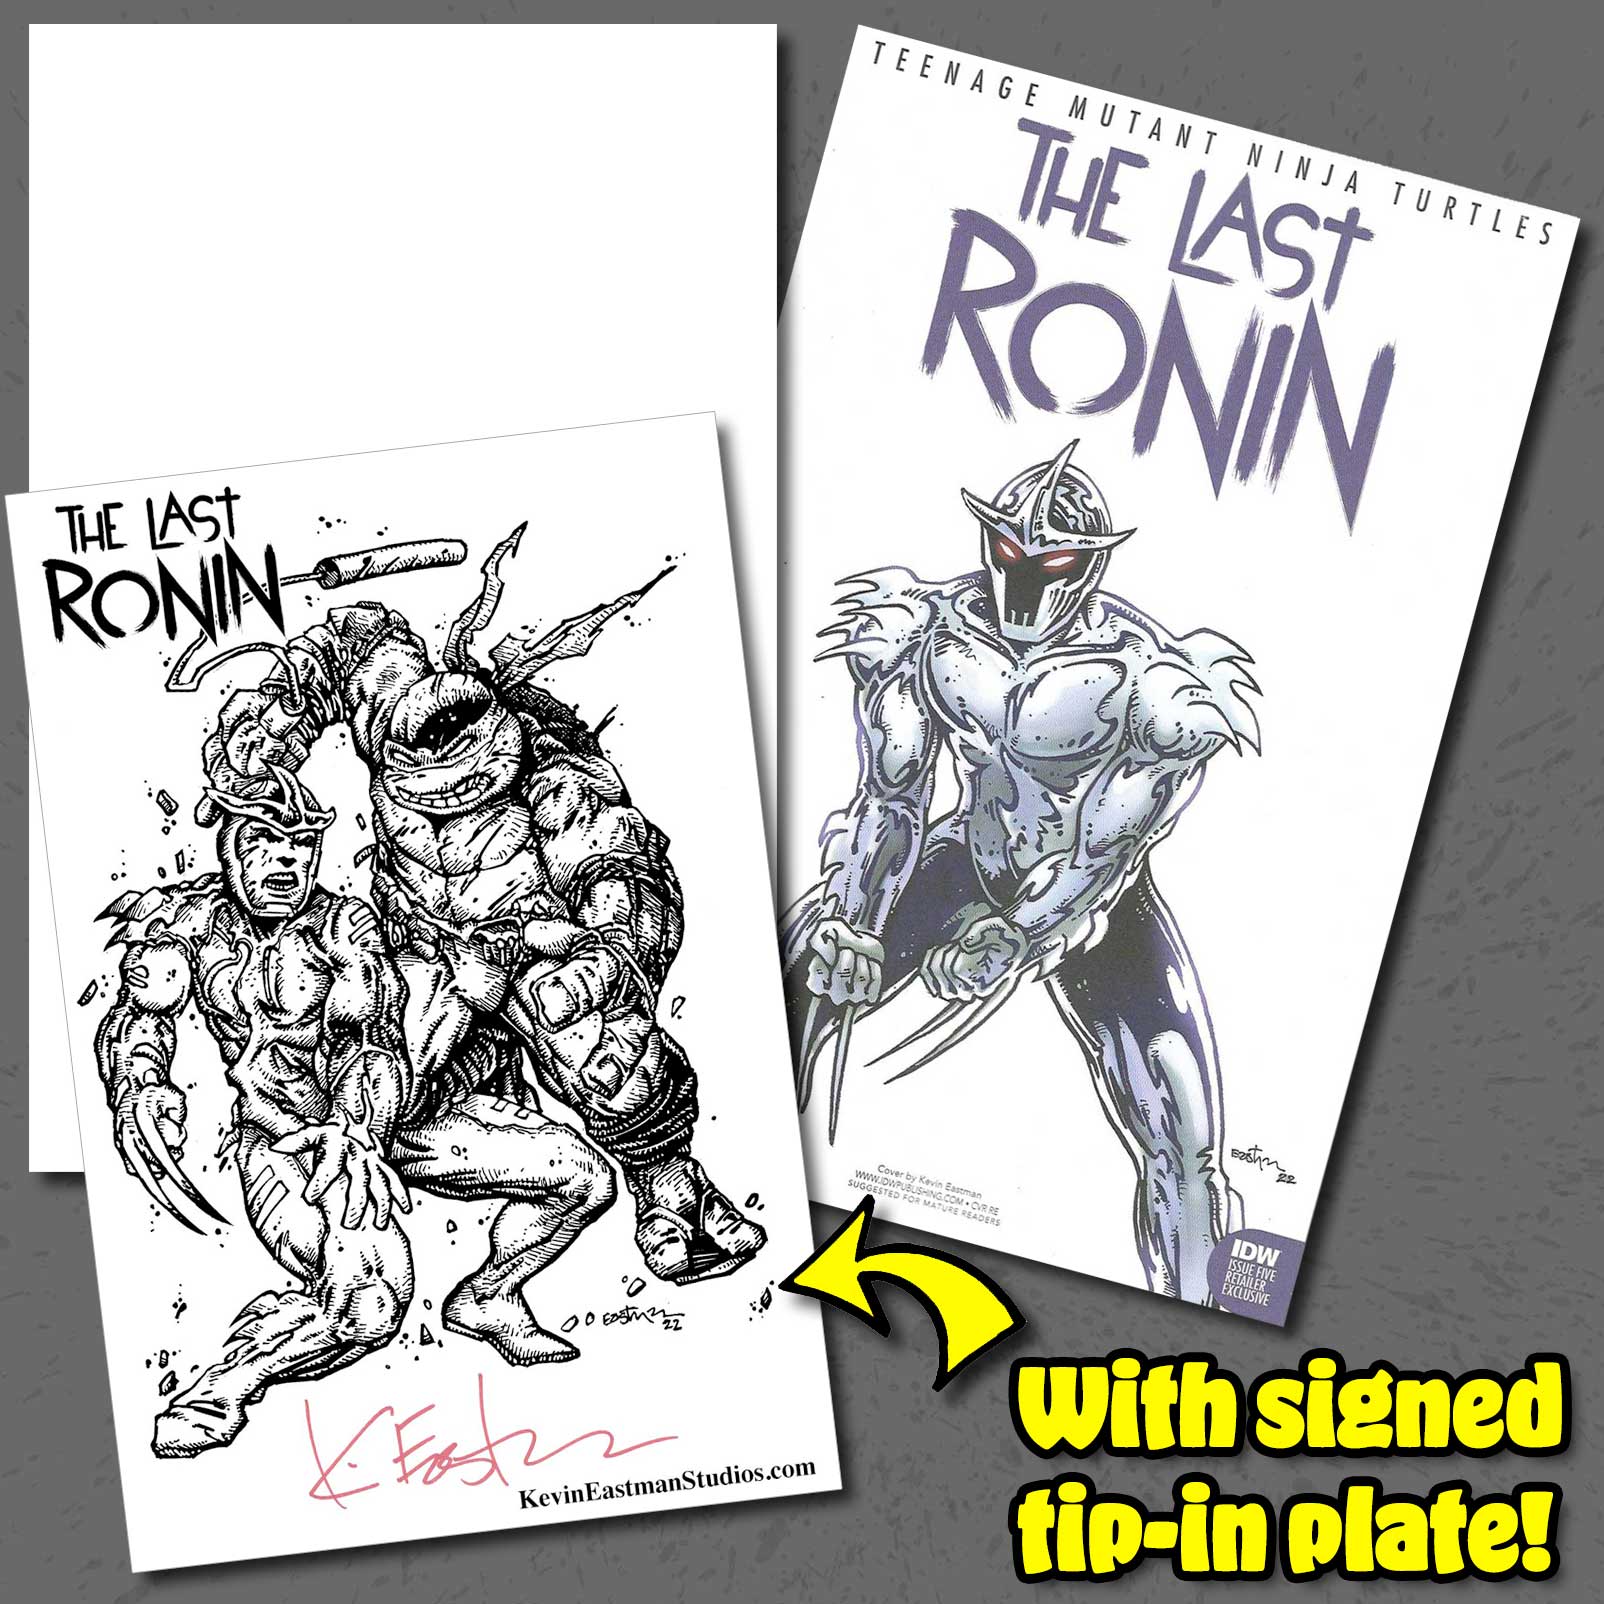 The Last Ronin issue 5, Eastman Studios Exclusive